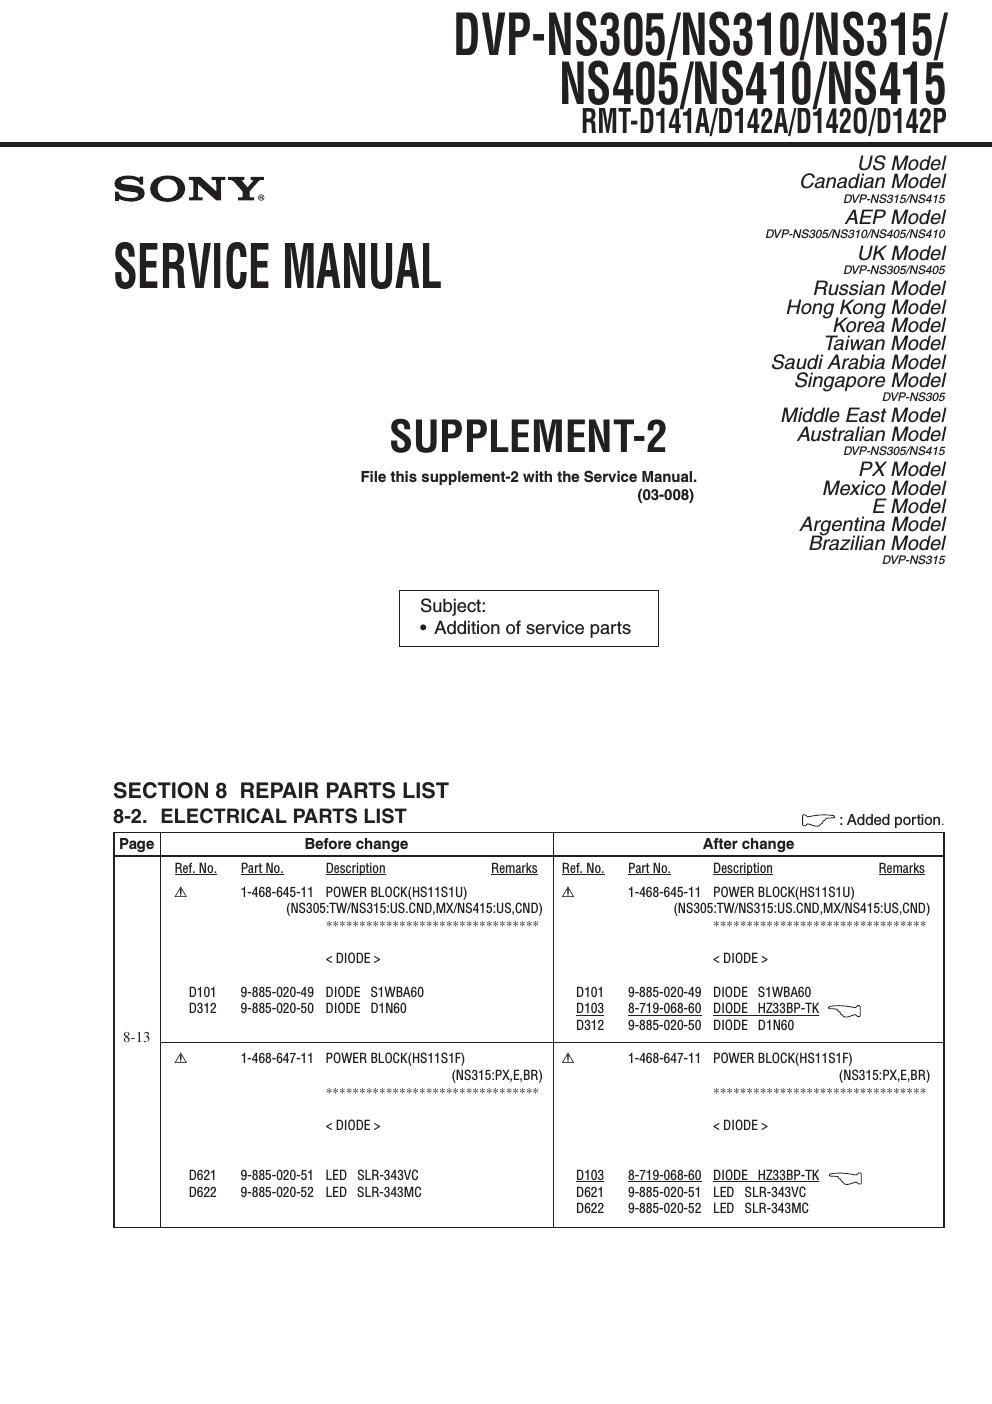 sony dvpns 305 service manual